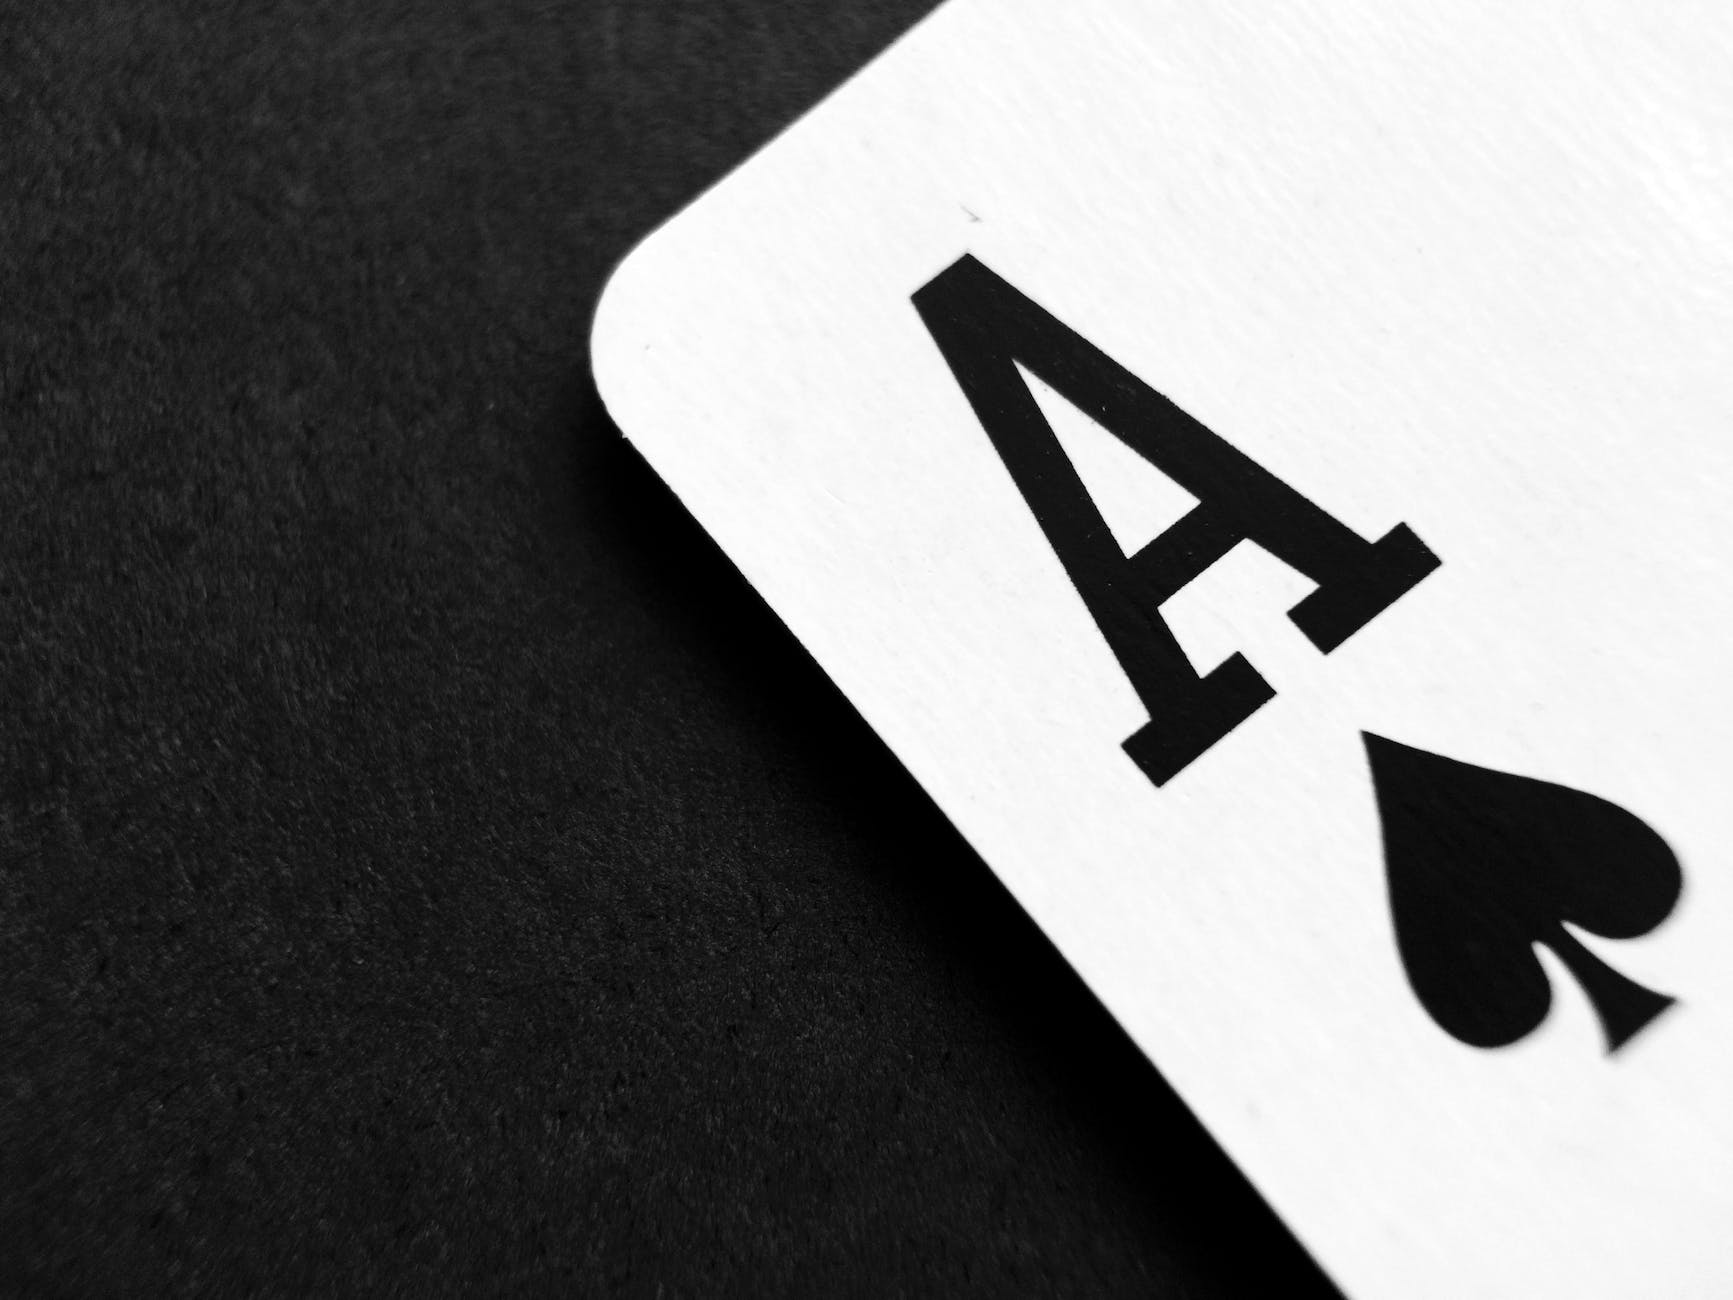 3 card poker odds calculator